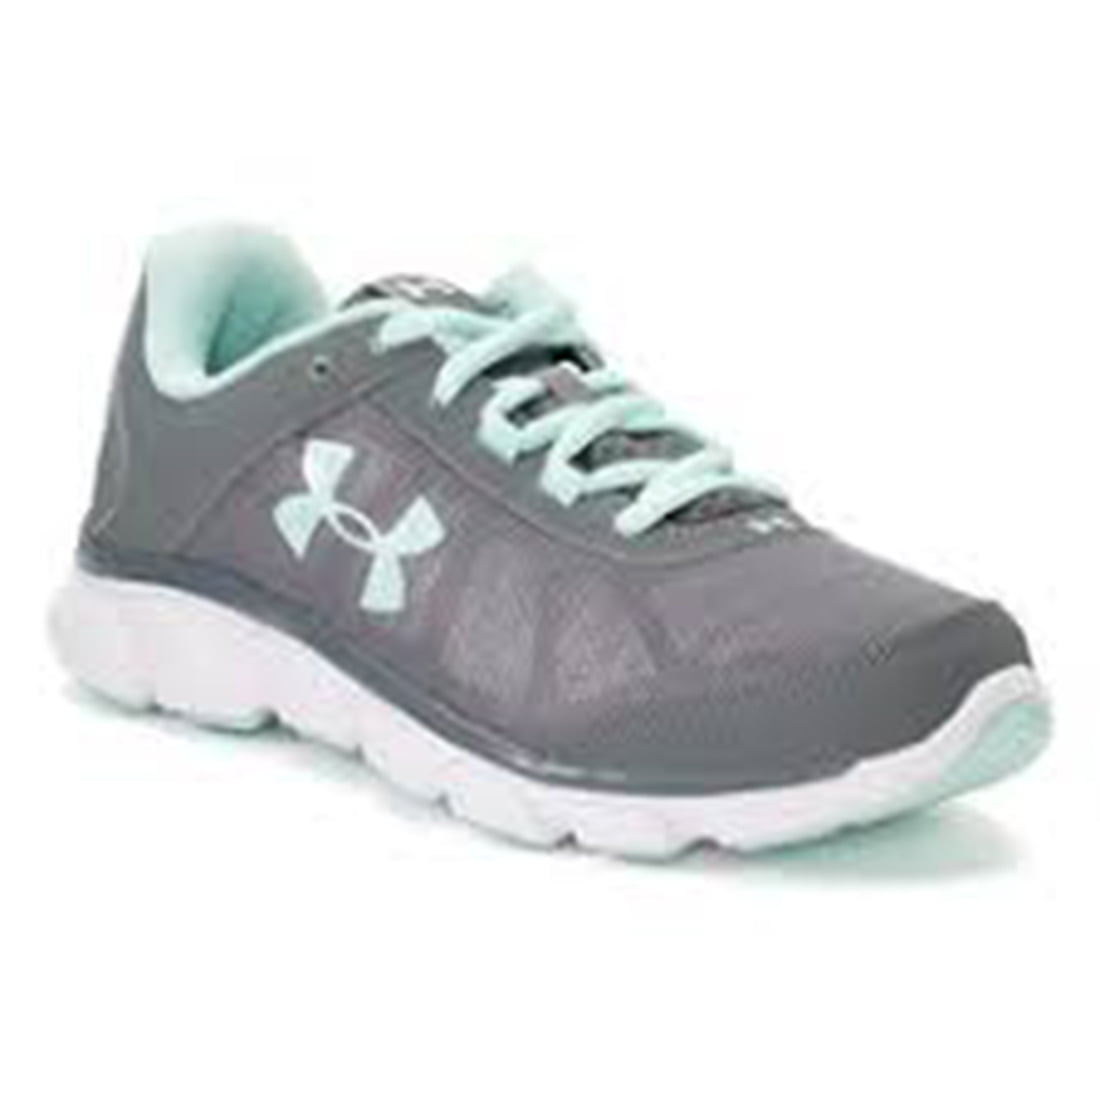 Steel Women's Running Shoes Under Armour 3020674 103 Micro G Assert 7 Graphite 